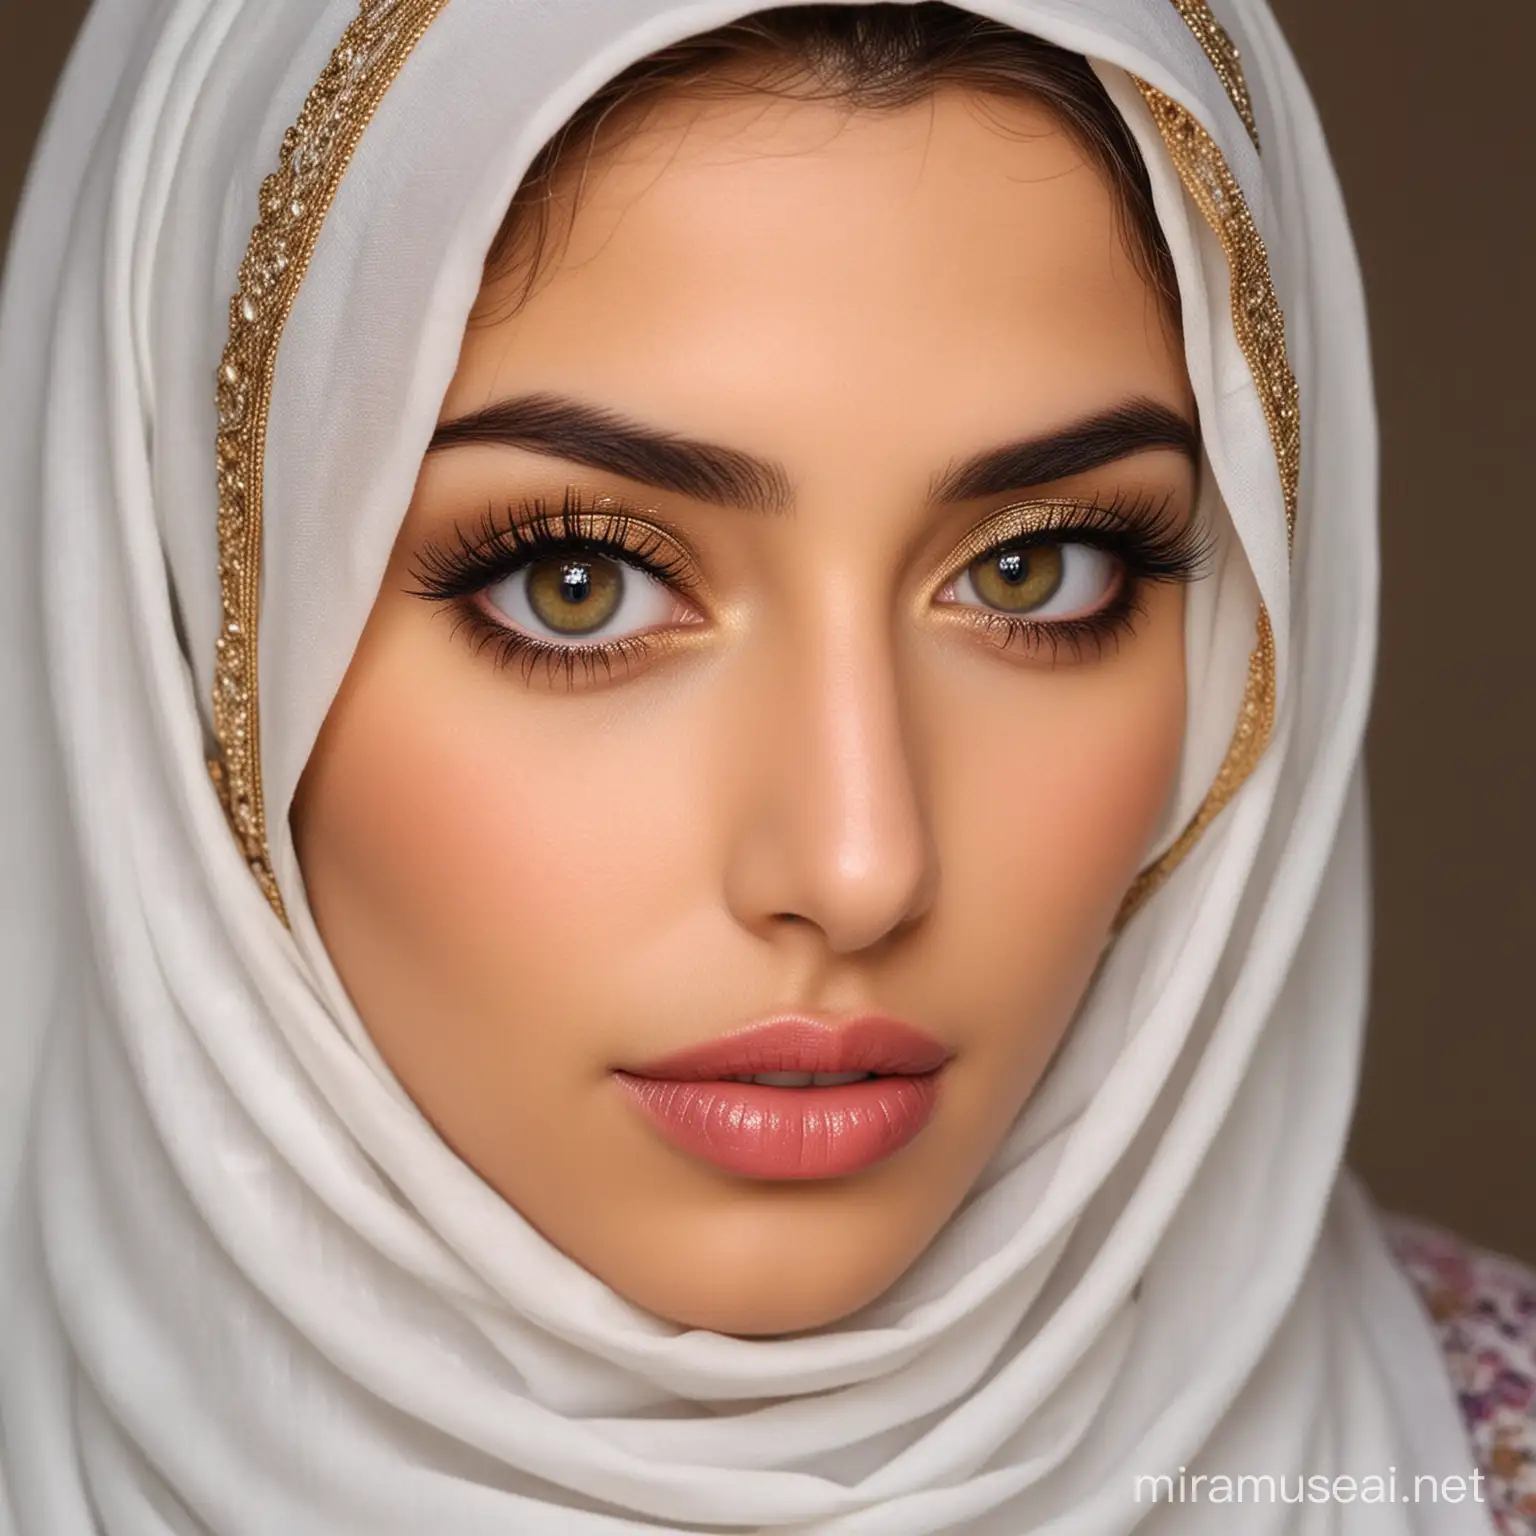 Beautiful Iranian Hijabi Girl with Golden Lips and Big Eyes